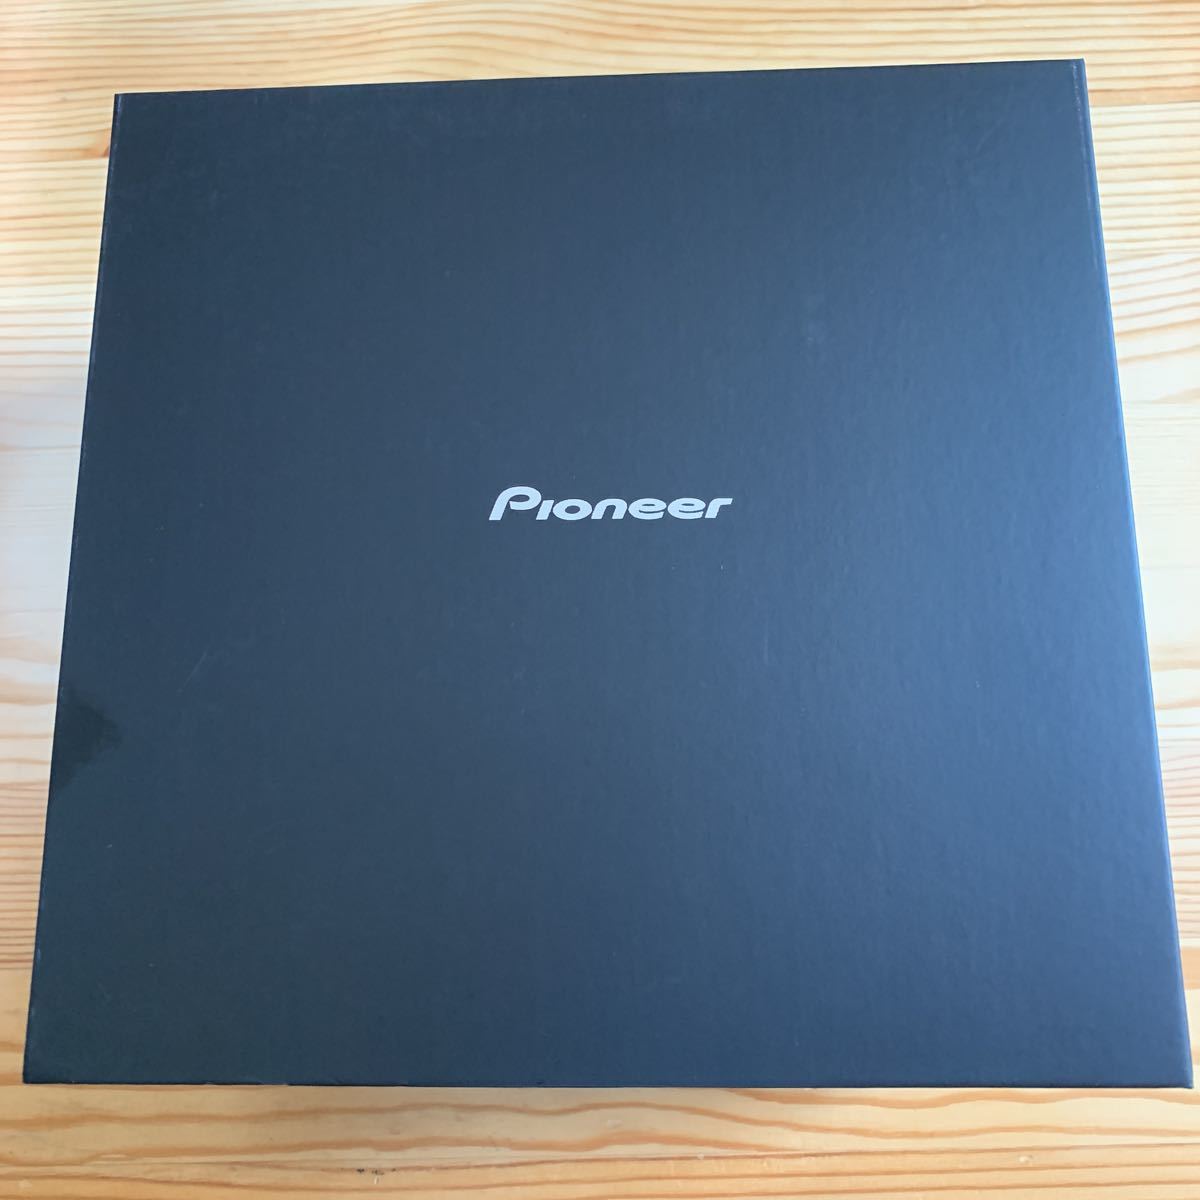  headphone | Pioneer |SEMX9| unused | unopened | Ultraman collaboration model | series highest peak | limited goods 250 pcs 